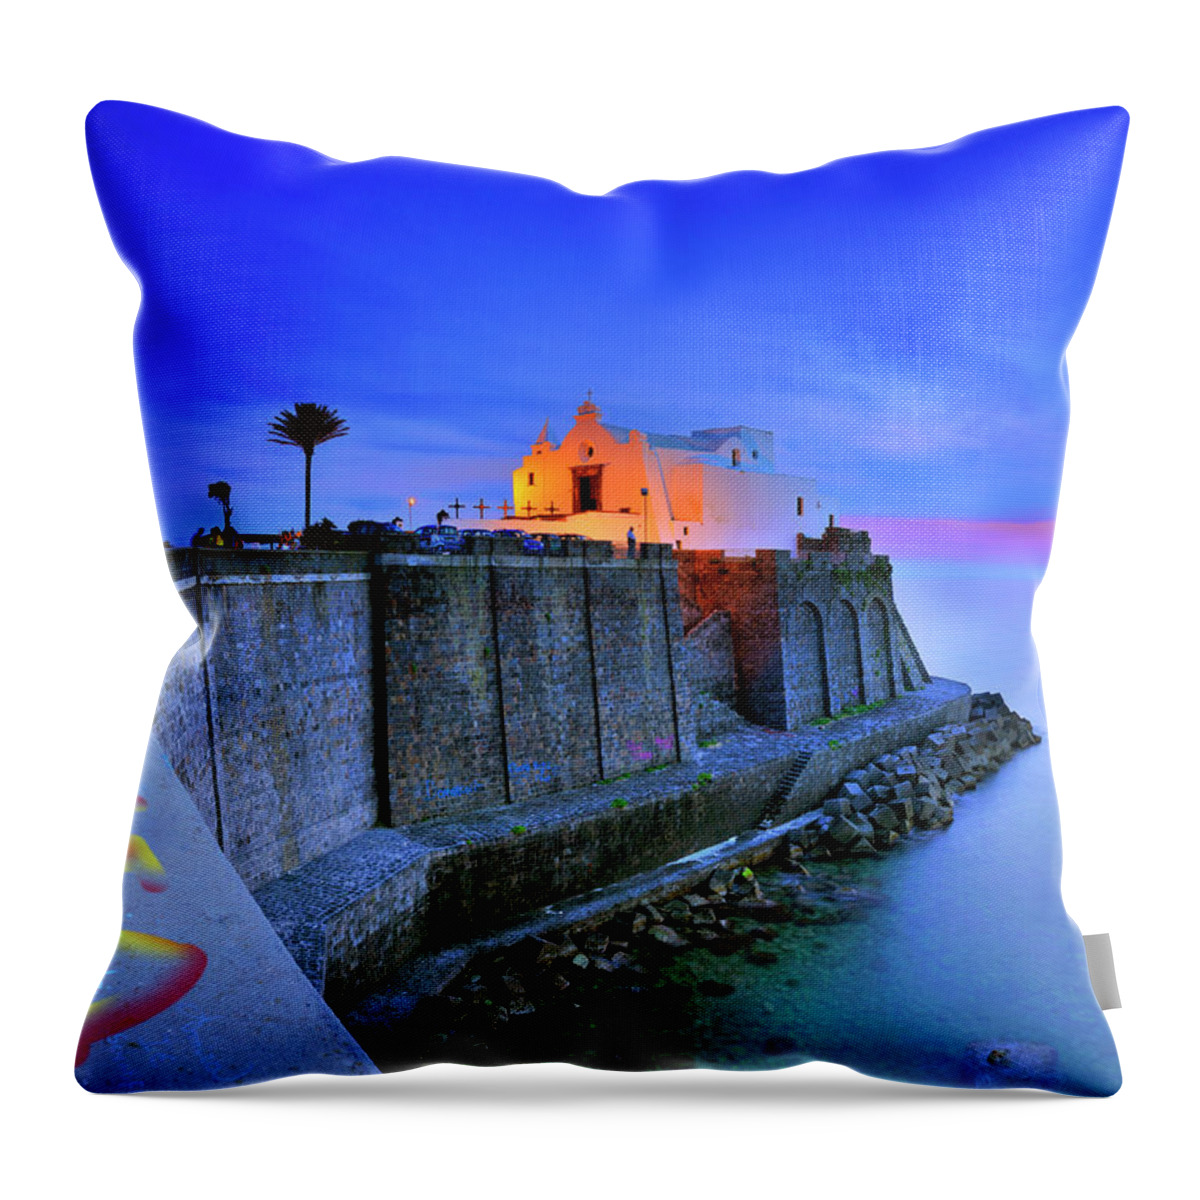 Estock Throw Pillow featuring the digital art Coastal Church, Naples, Italy by Luca Da Ros